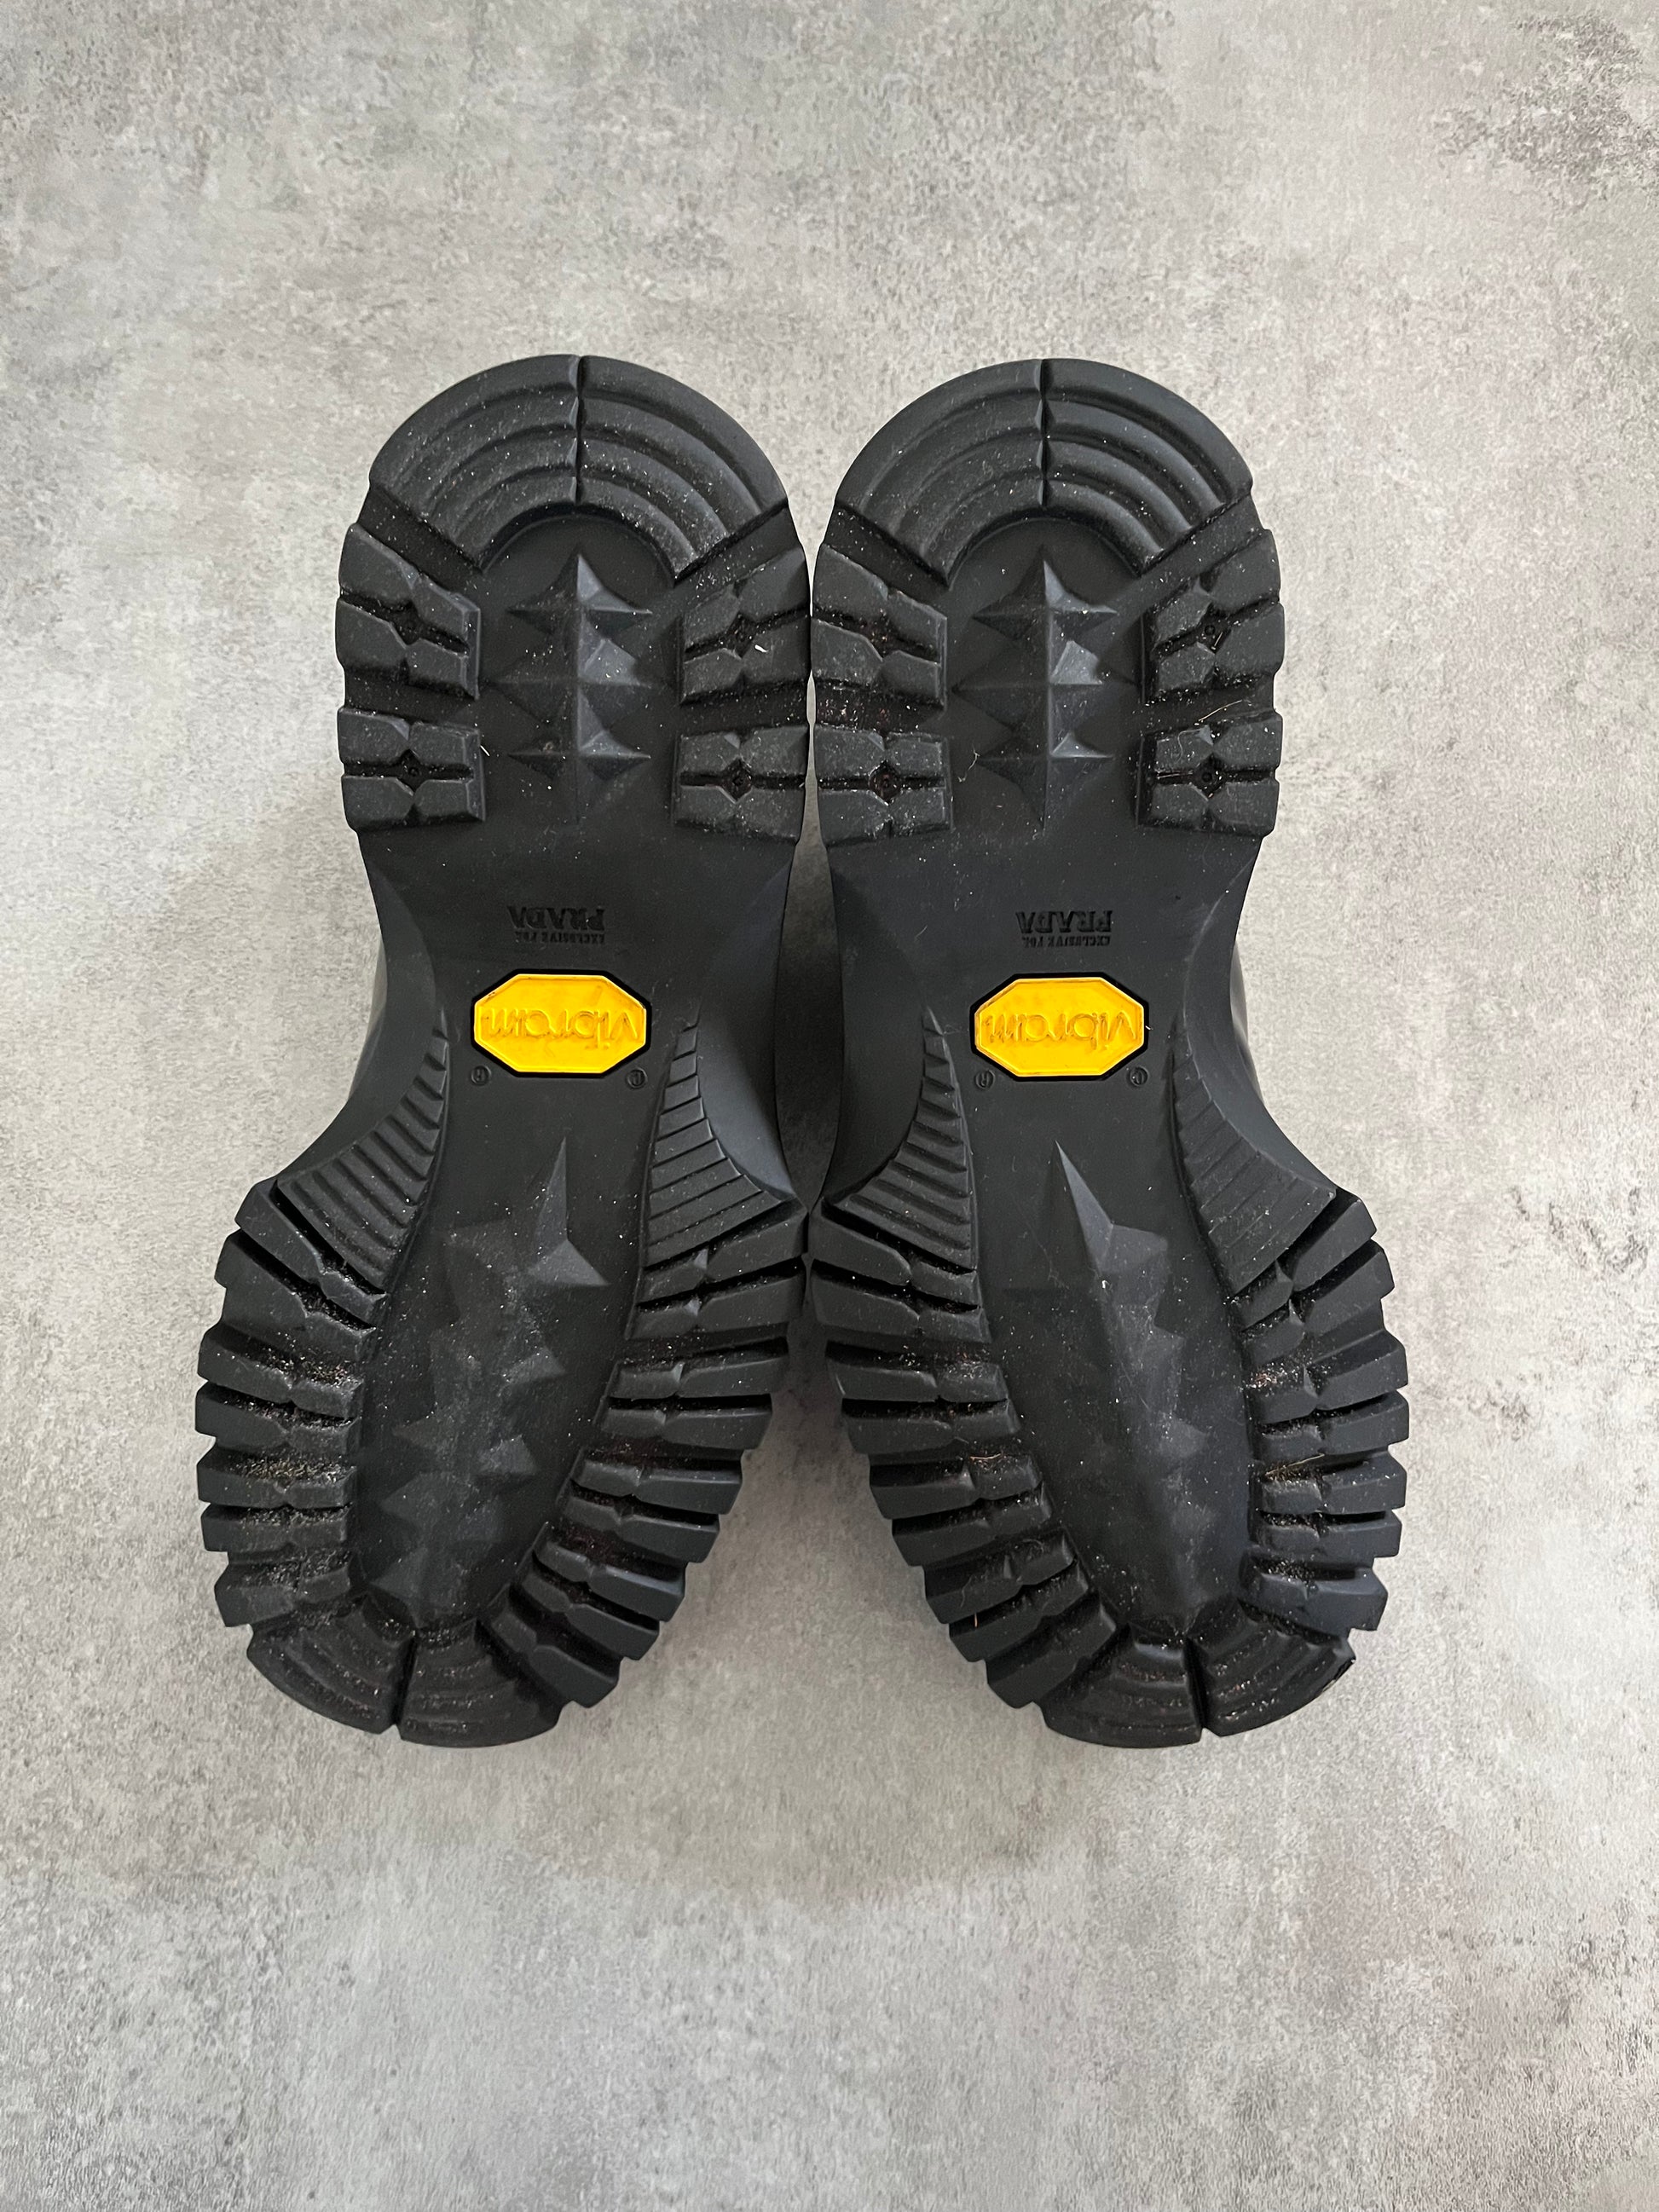 AW1999 Prada Vibram Leather Boots (41) - 10